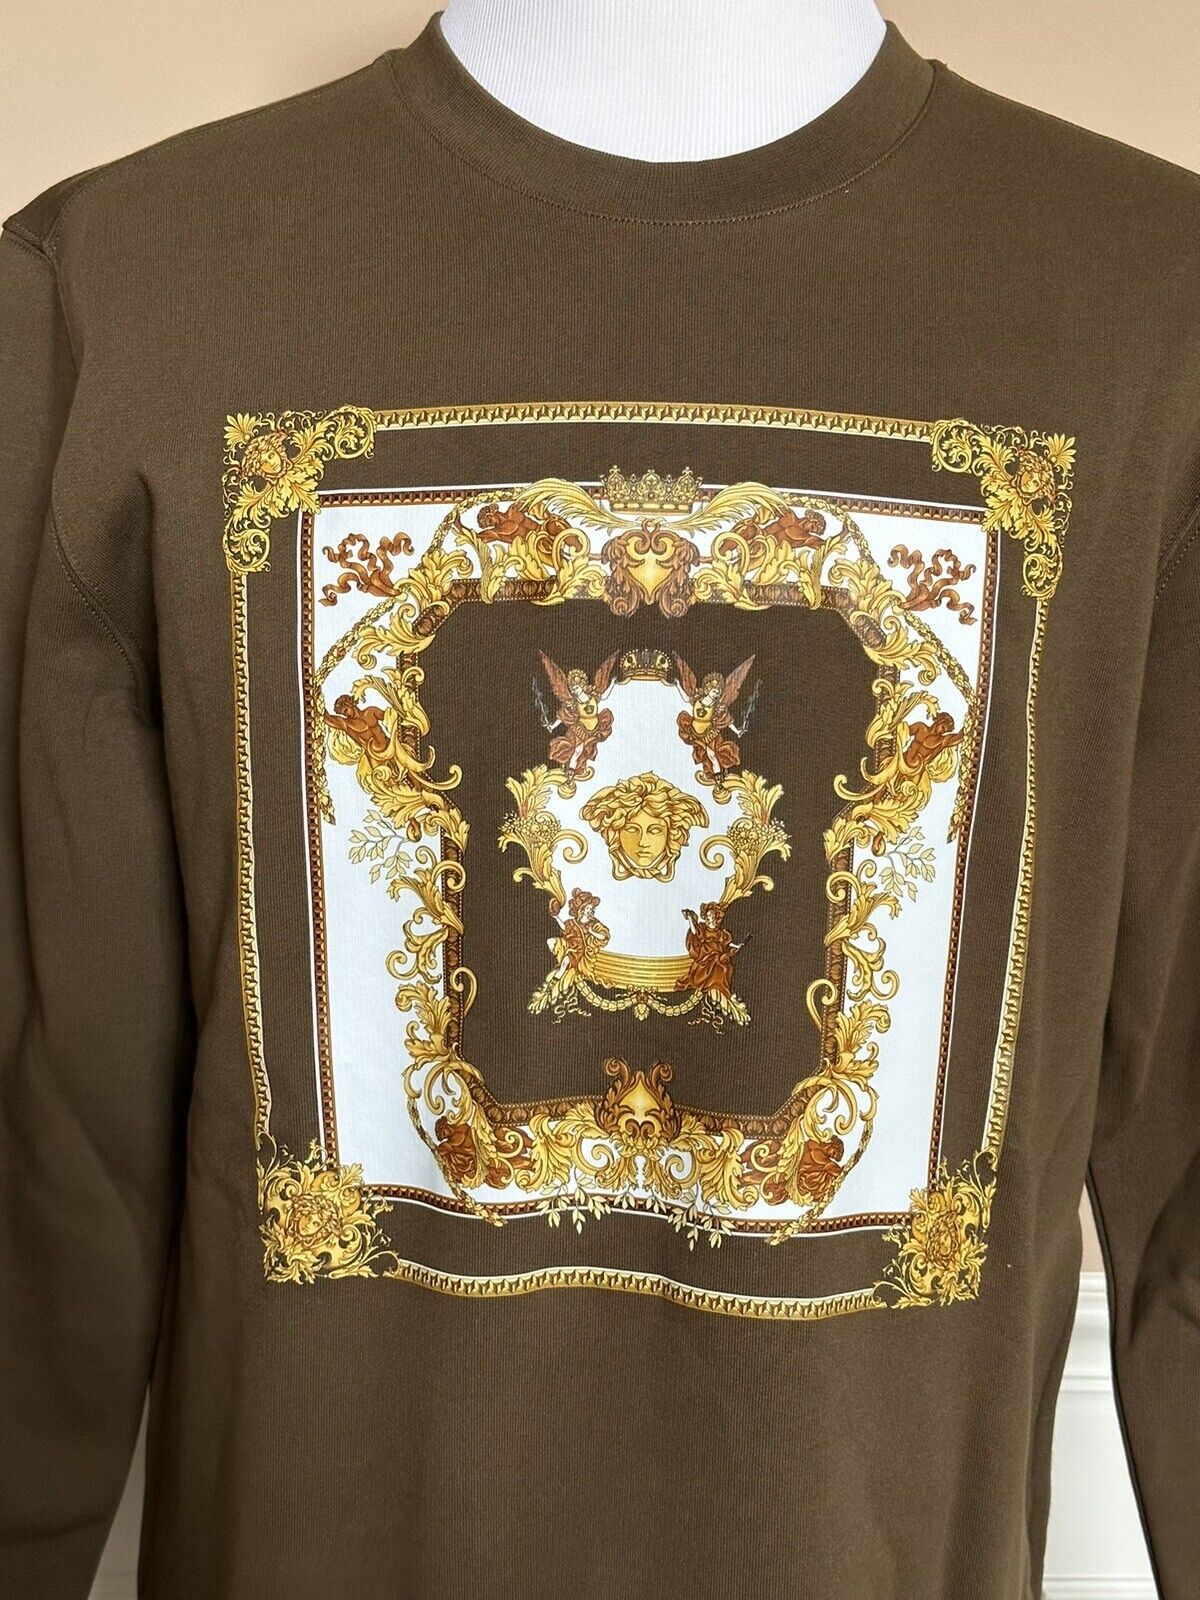 Neu mit Etikett: 850 $ Versace Medusa Renaissance Khaki Baumwoll-Sweatshirt 4XL 1008282 